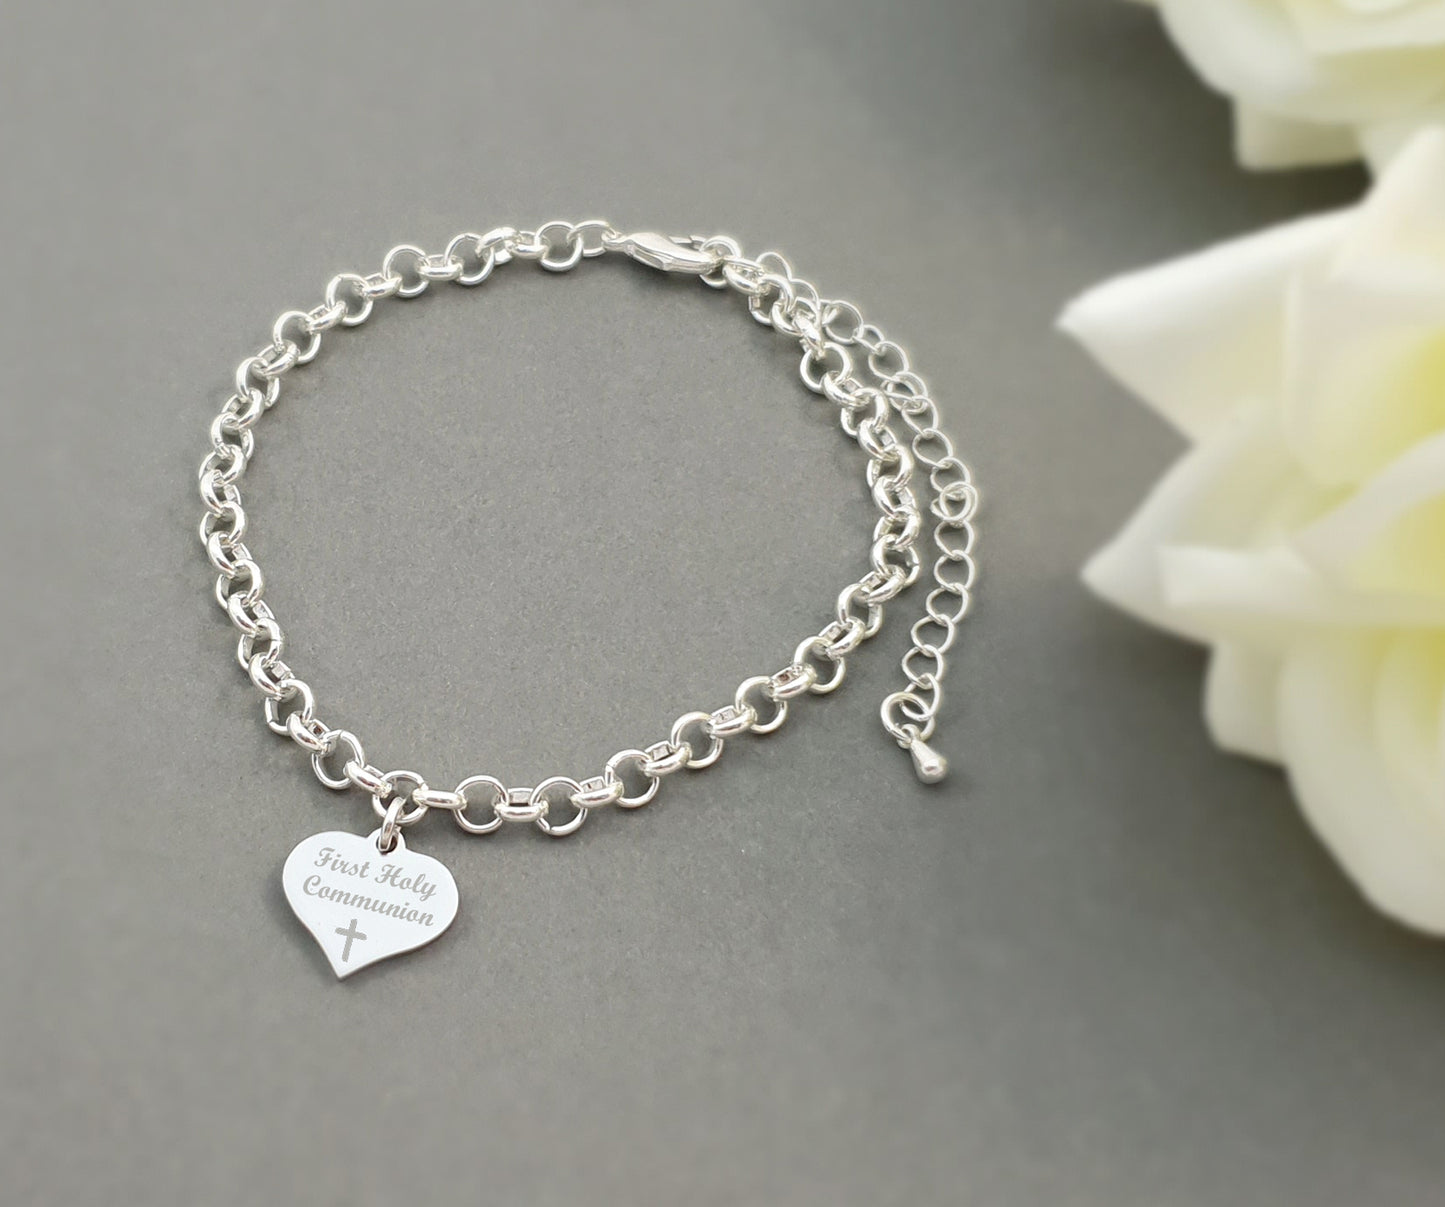 First Holy Communion Engraved Heart Charm Link Bracelet, Gift for Girl's